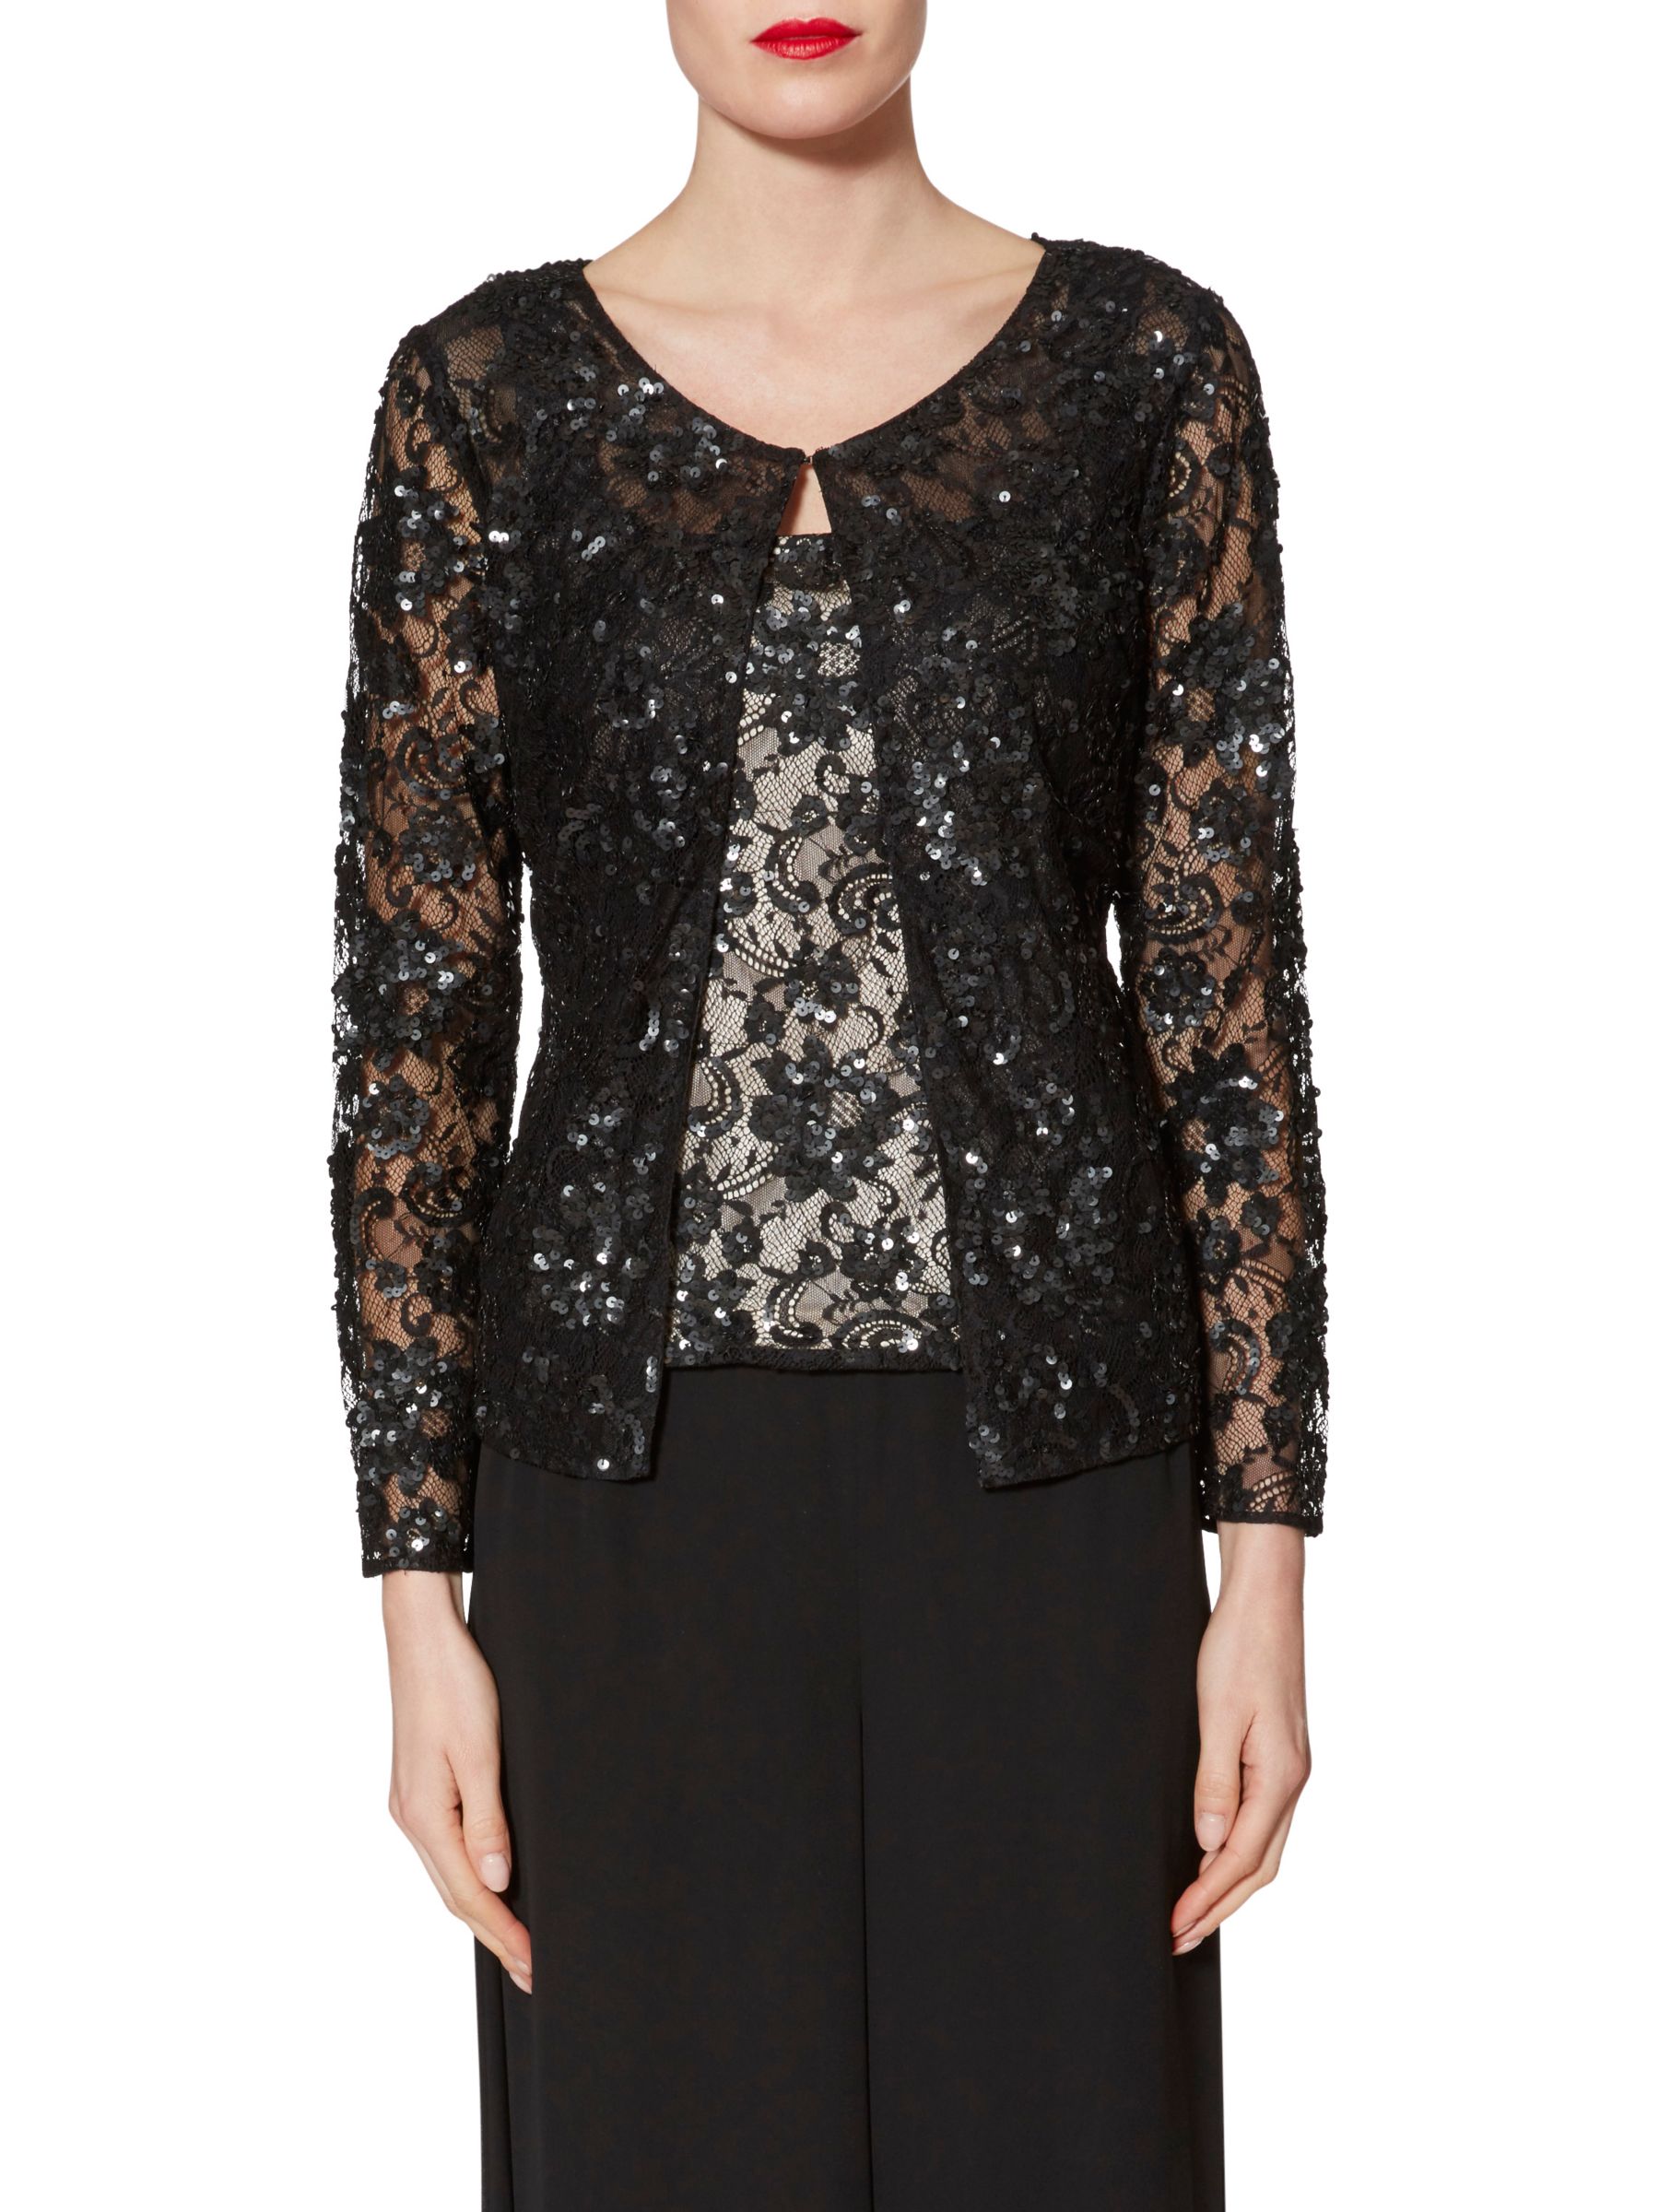 Gina Bacconi Sequin Lace Jacket, Black/Gold, 12